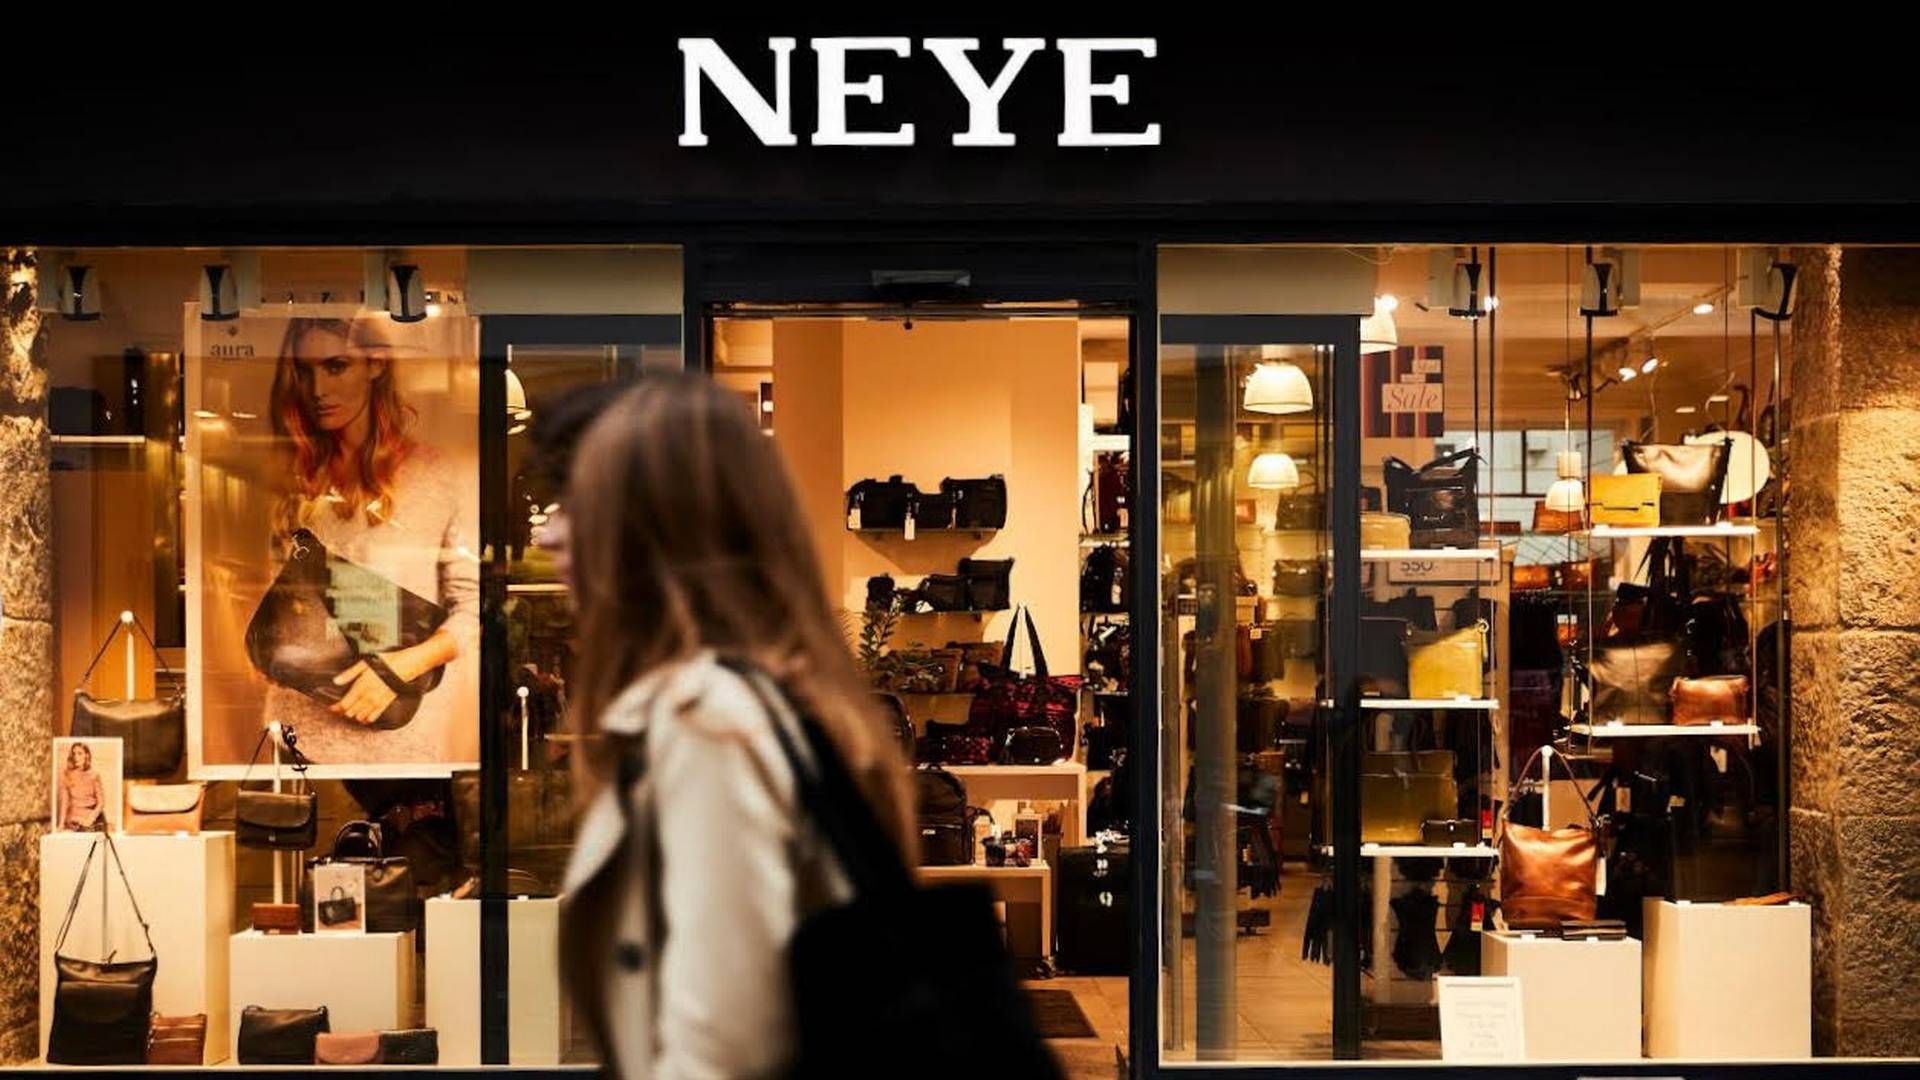 Neyes 45 butikker og netbutik har leveret det bedste resultat i fem år. | Foto: Neye/pr.